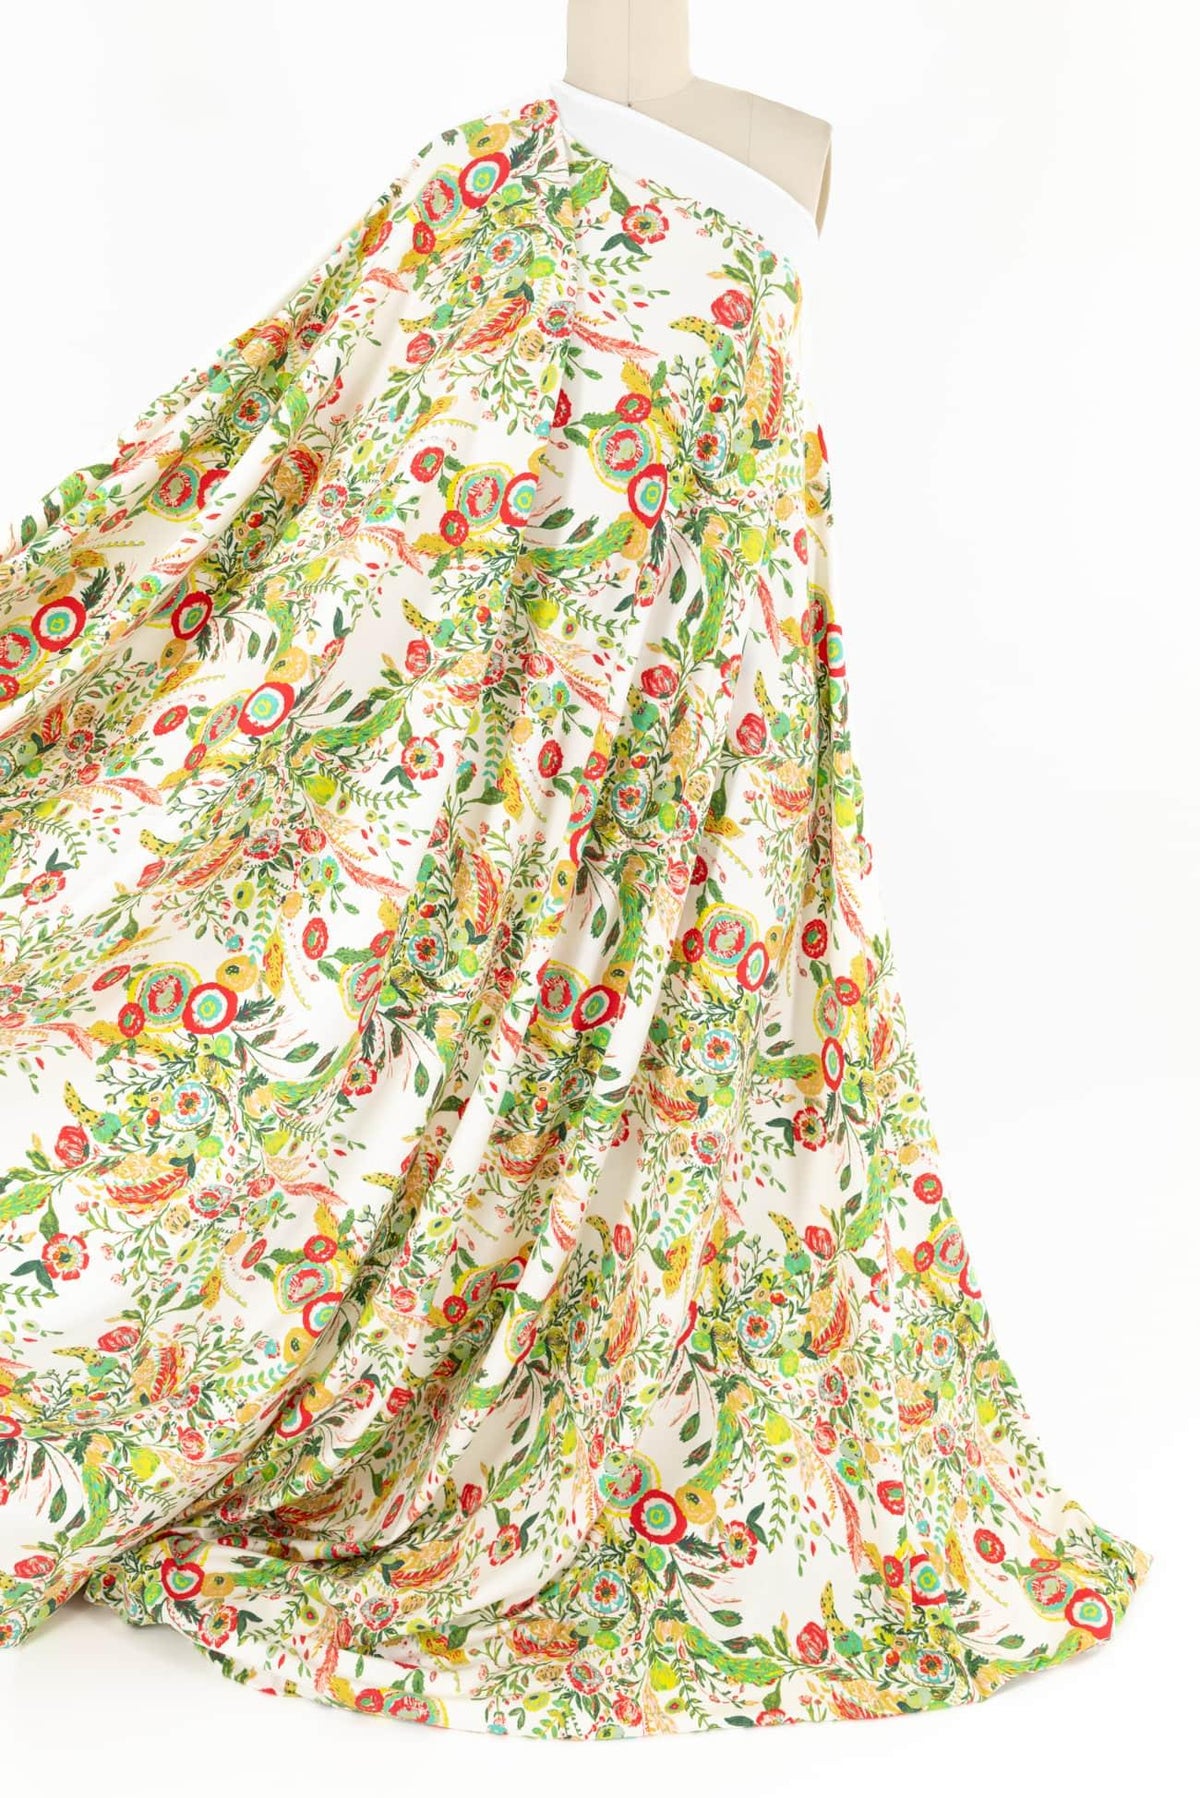 Florence Cotton Knit - Marcy Tilton Fabrics